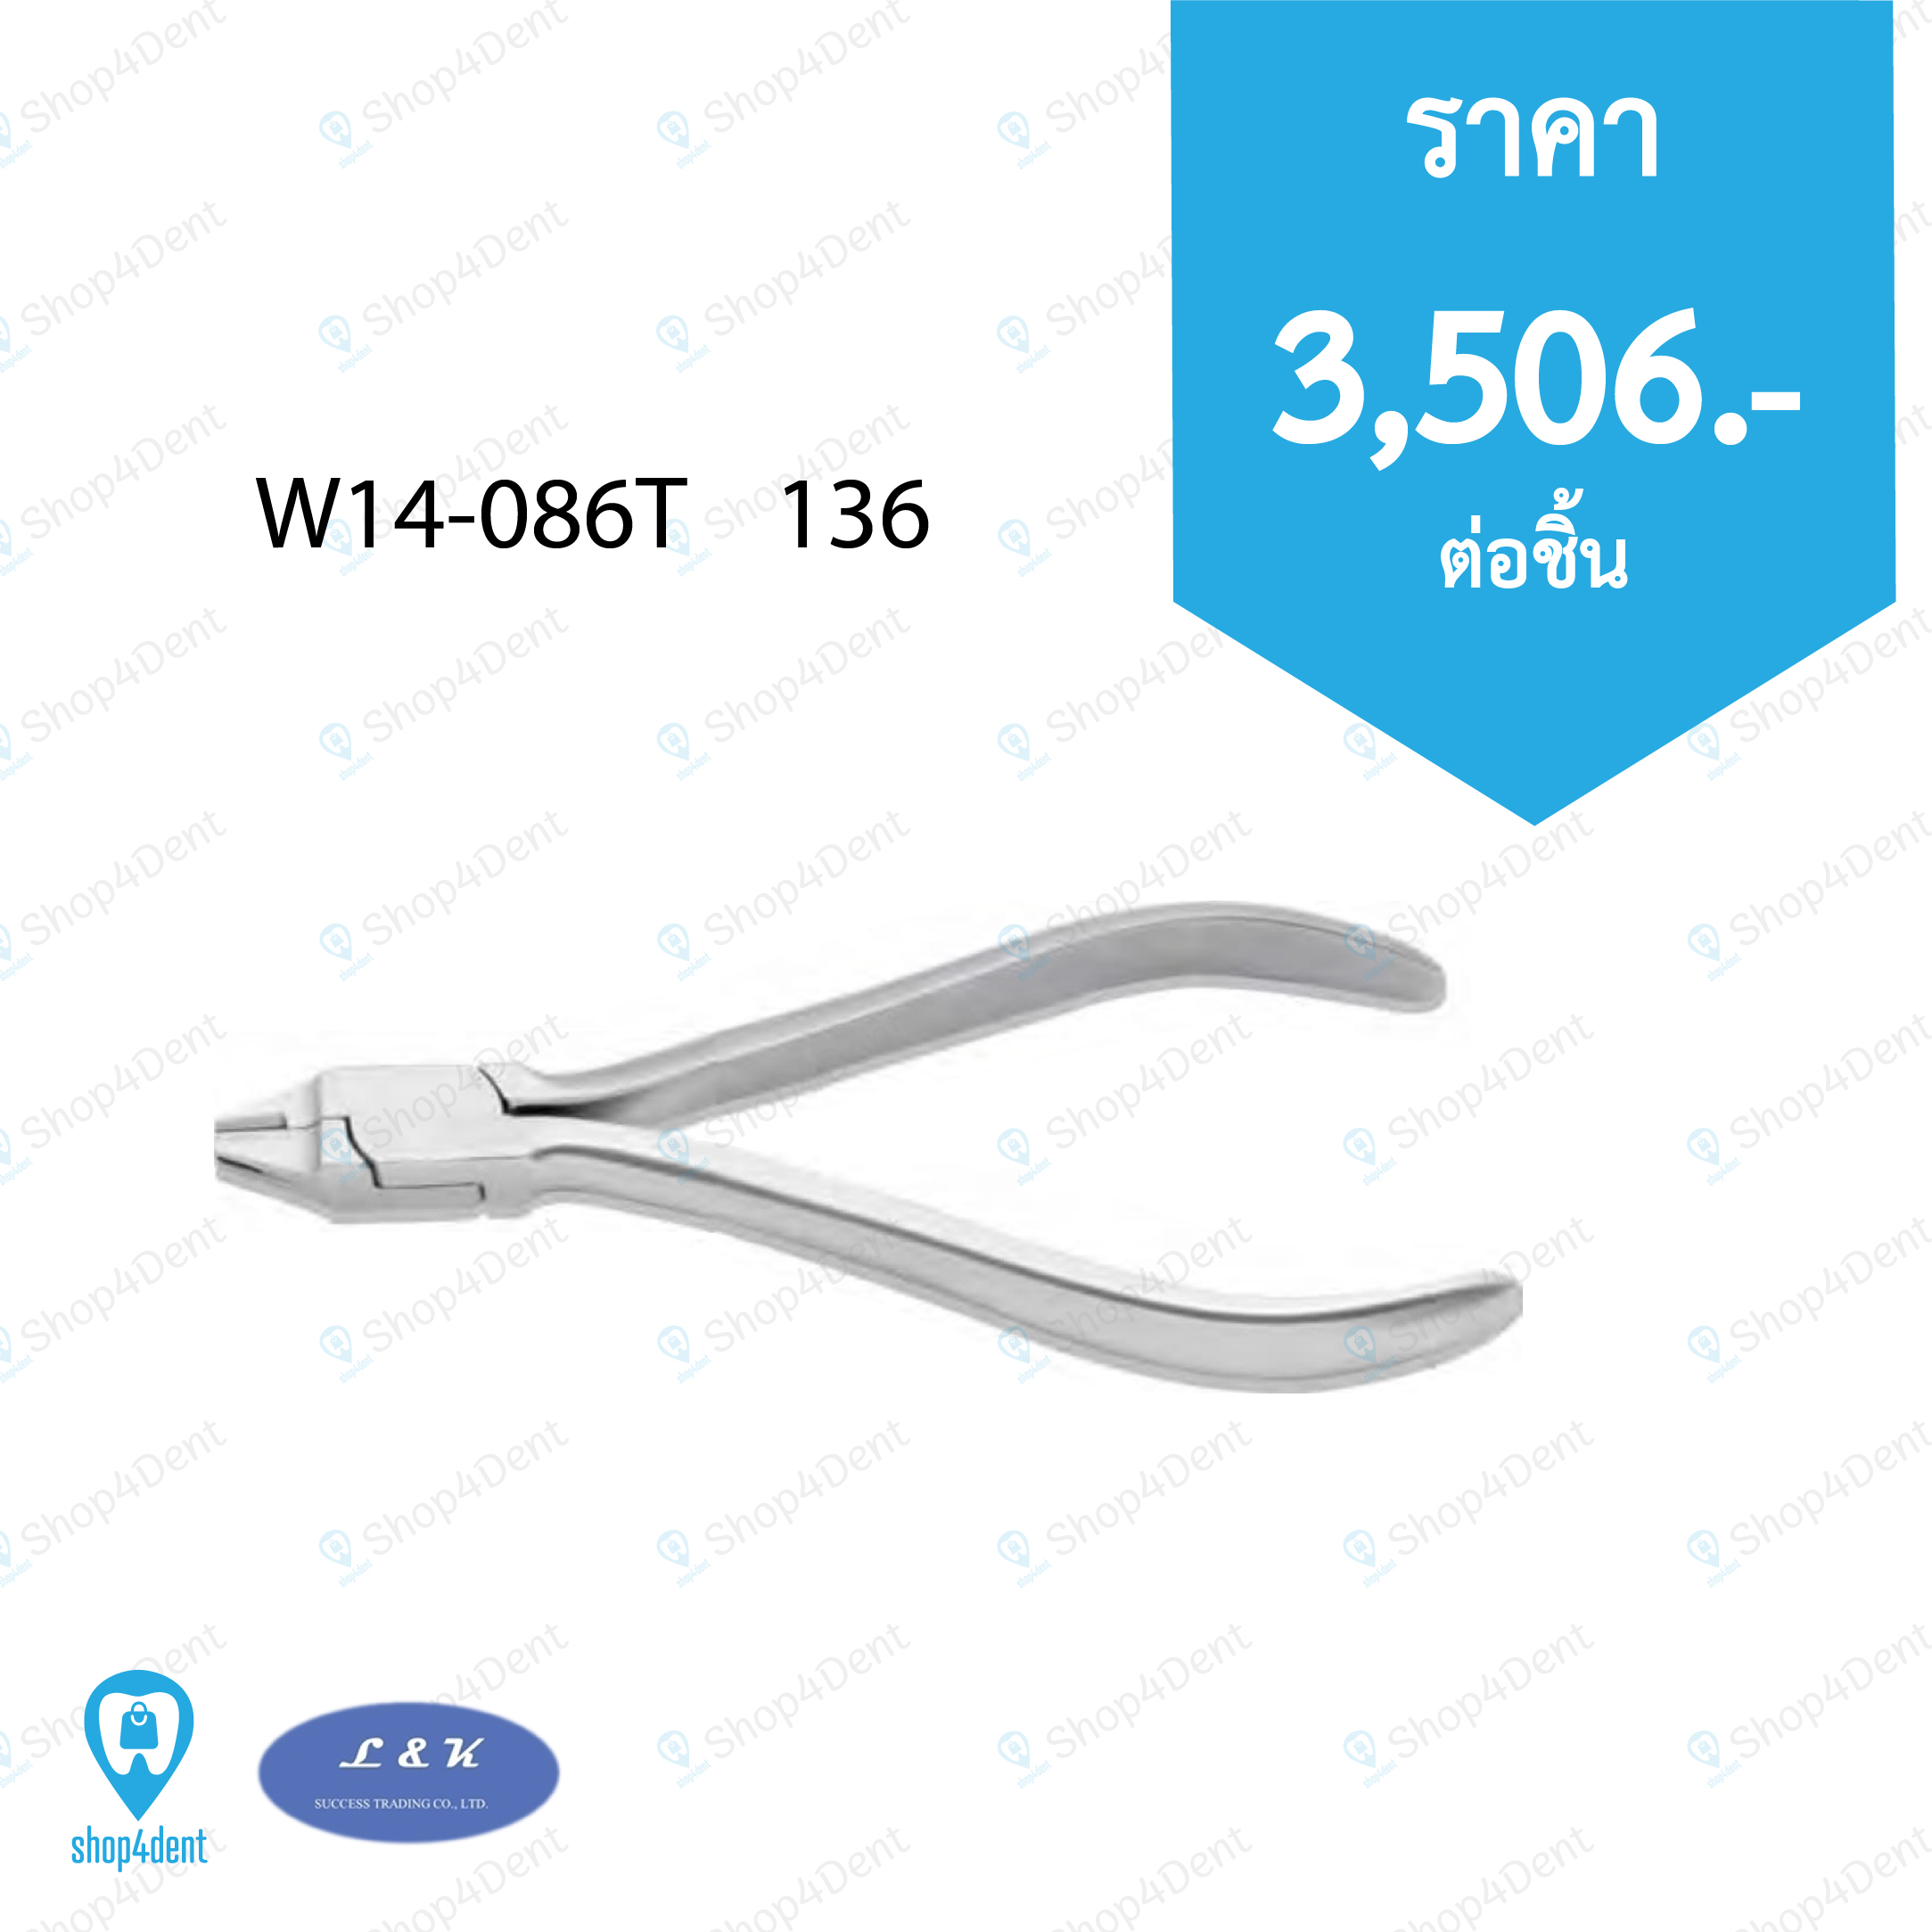 Orthodontic Pliers_W14-086T    136